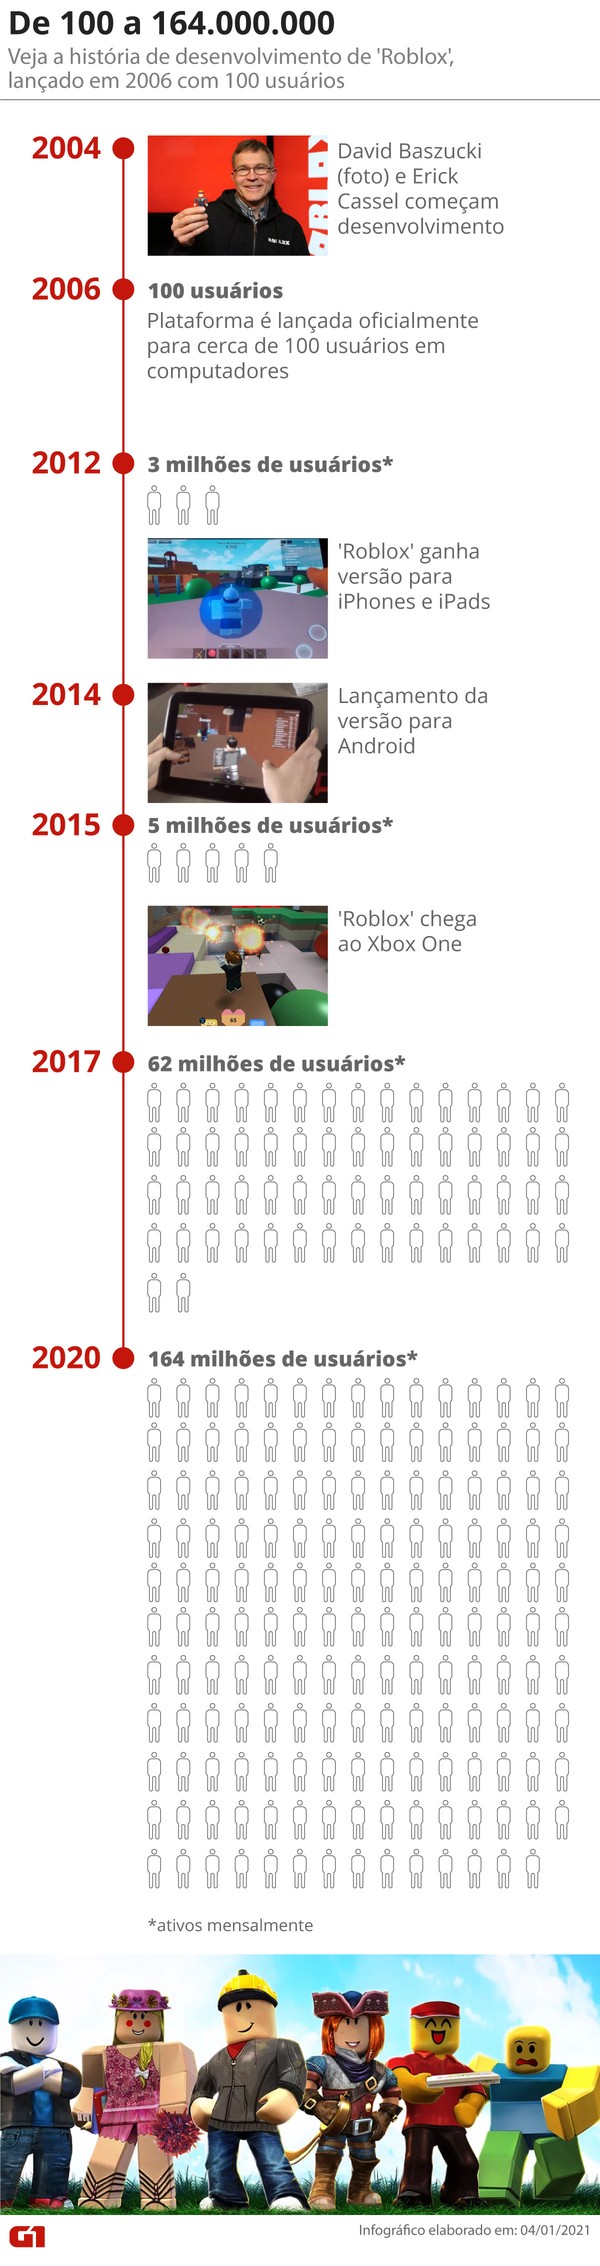 Como Roblox Foi De 100 Usuarios A 164 Milhoes De Fas Executivo Explica Estrategia Games G1 - console e jogos brasil jogando roblox